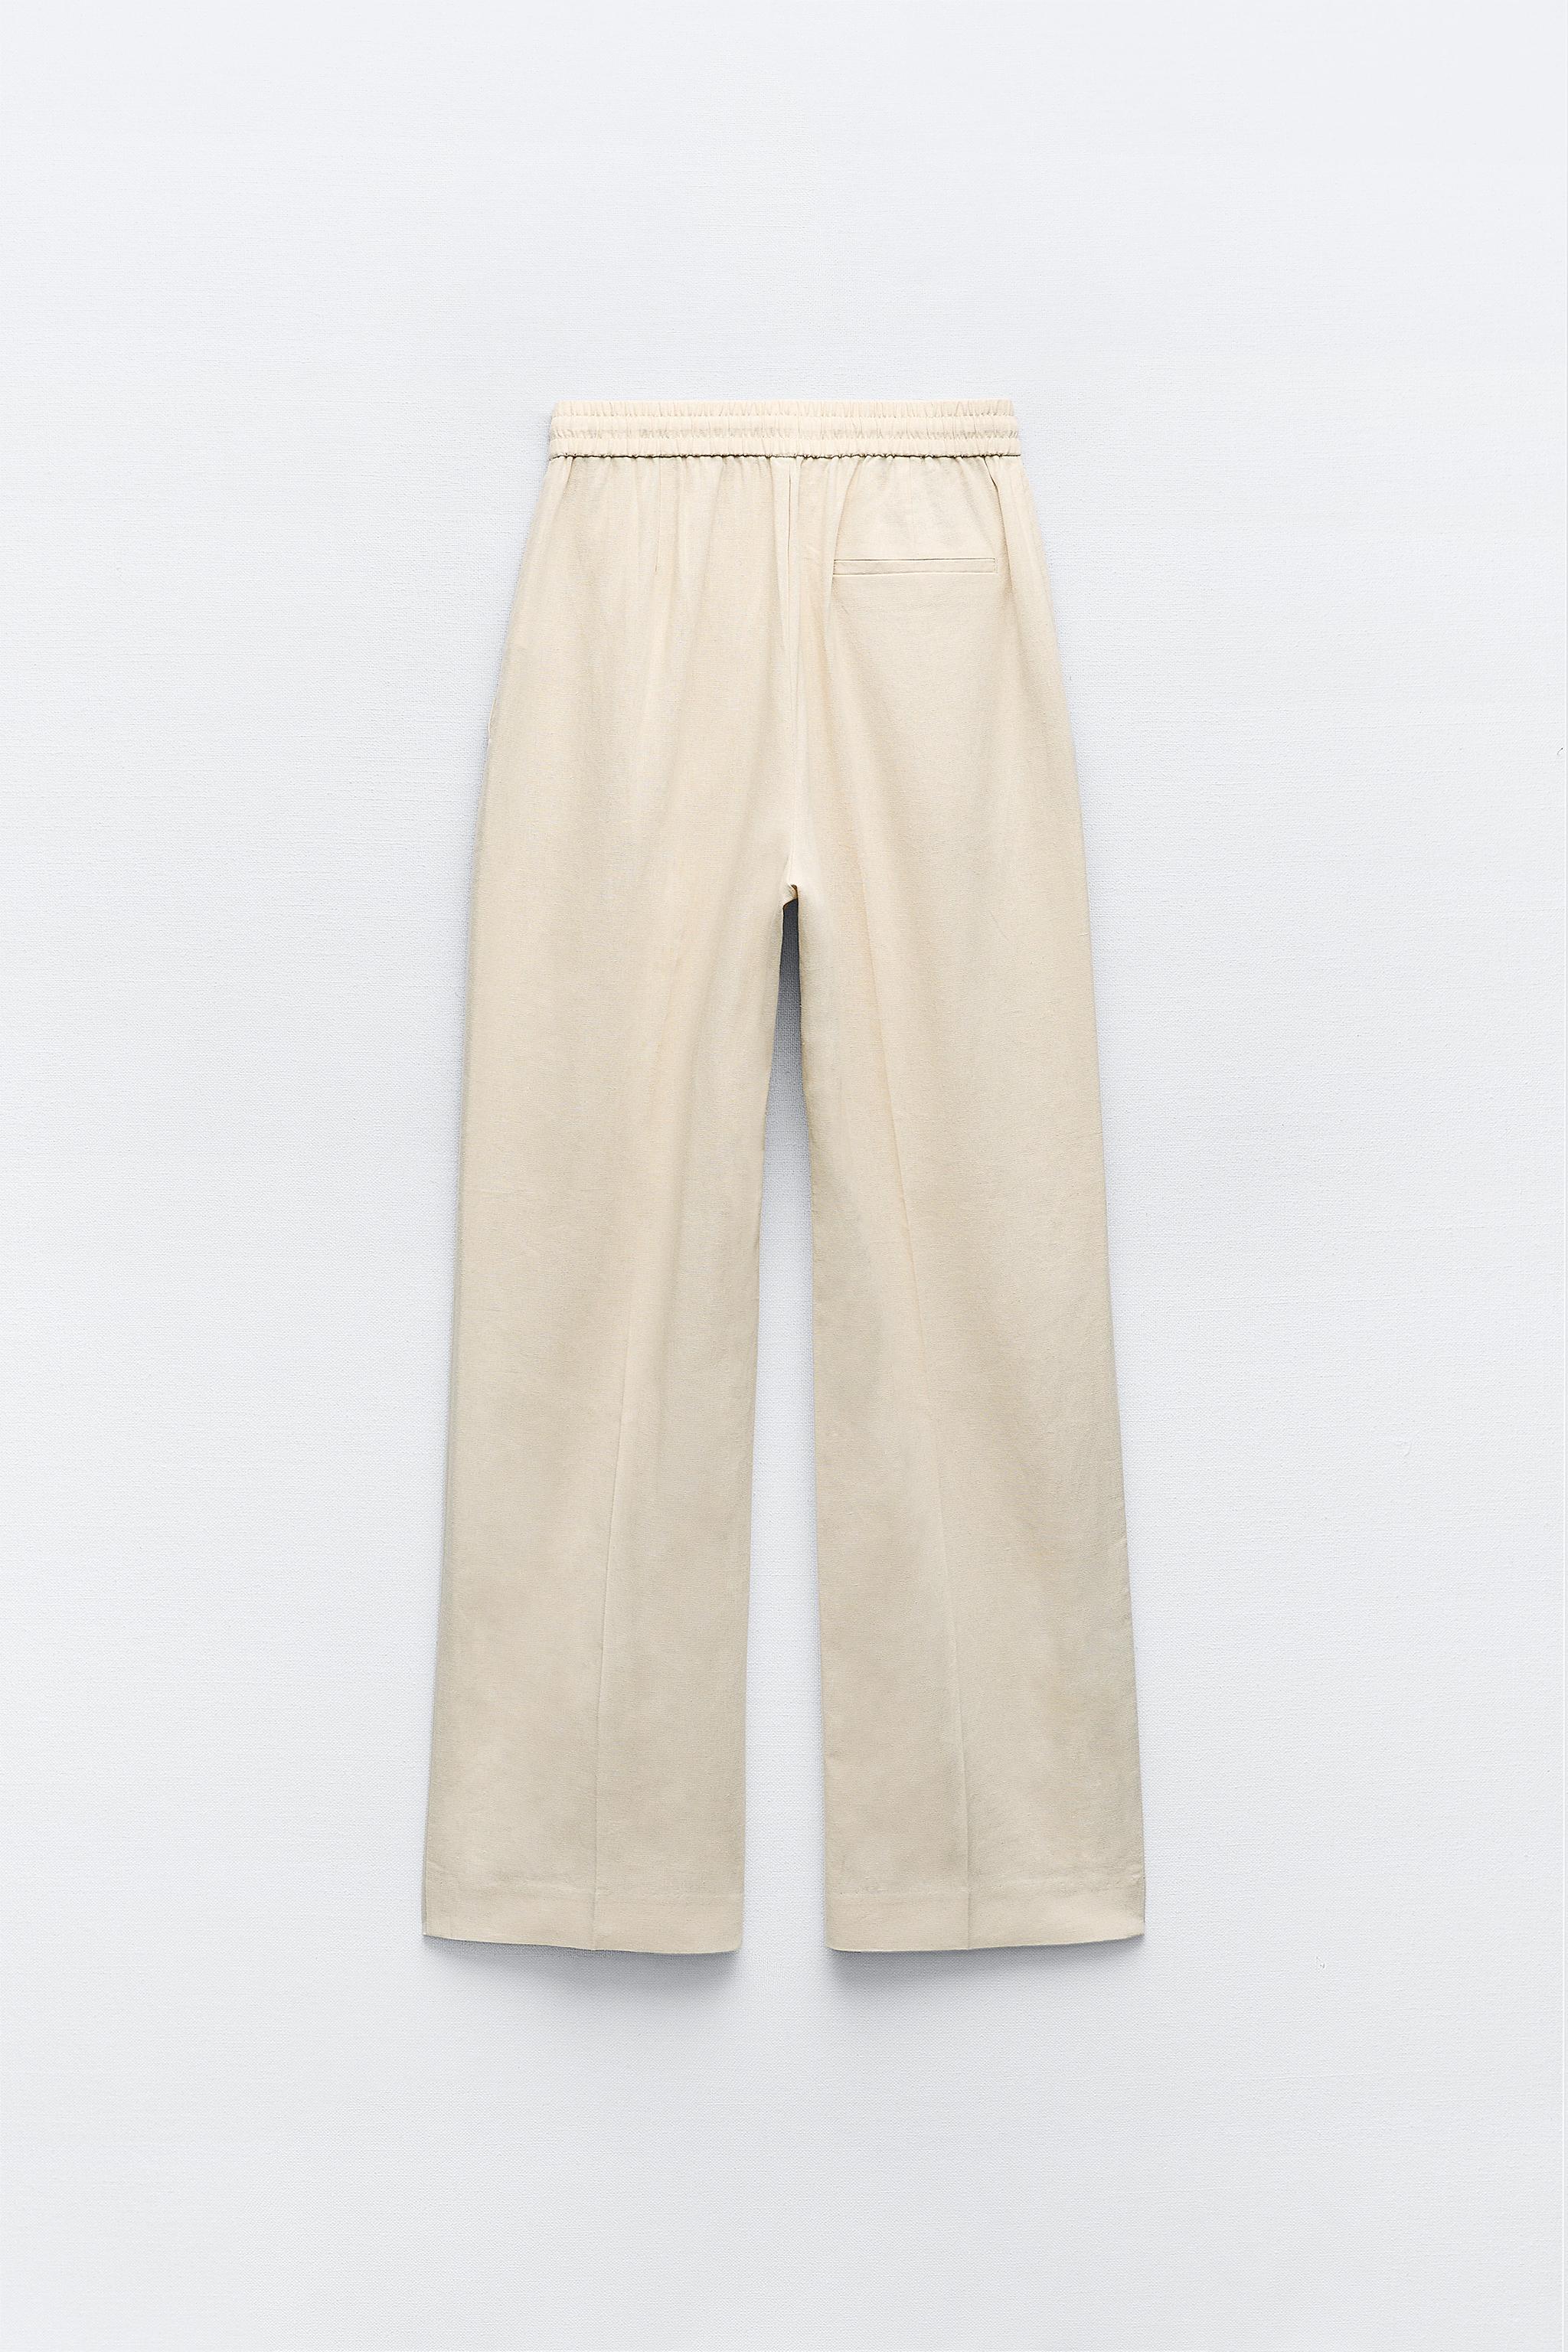 me Women's Linen Blend Pants - Windsurfer Blue - Size 14